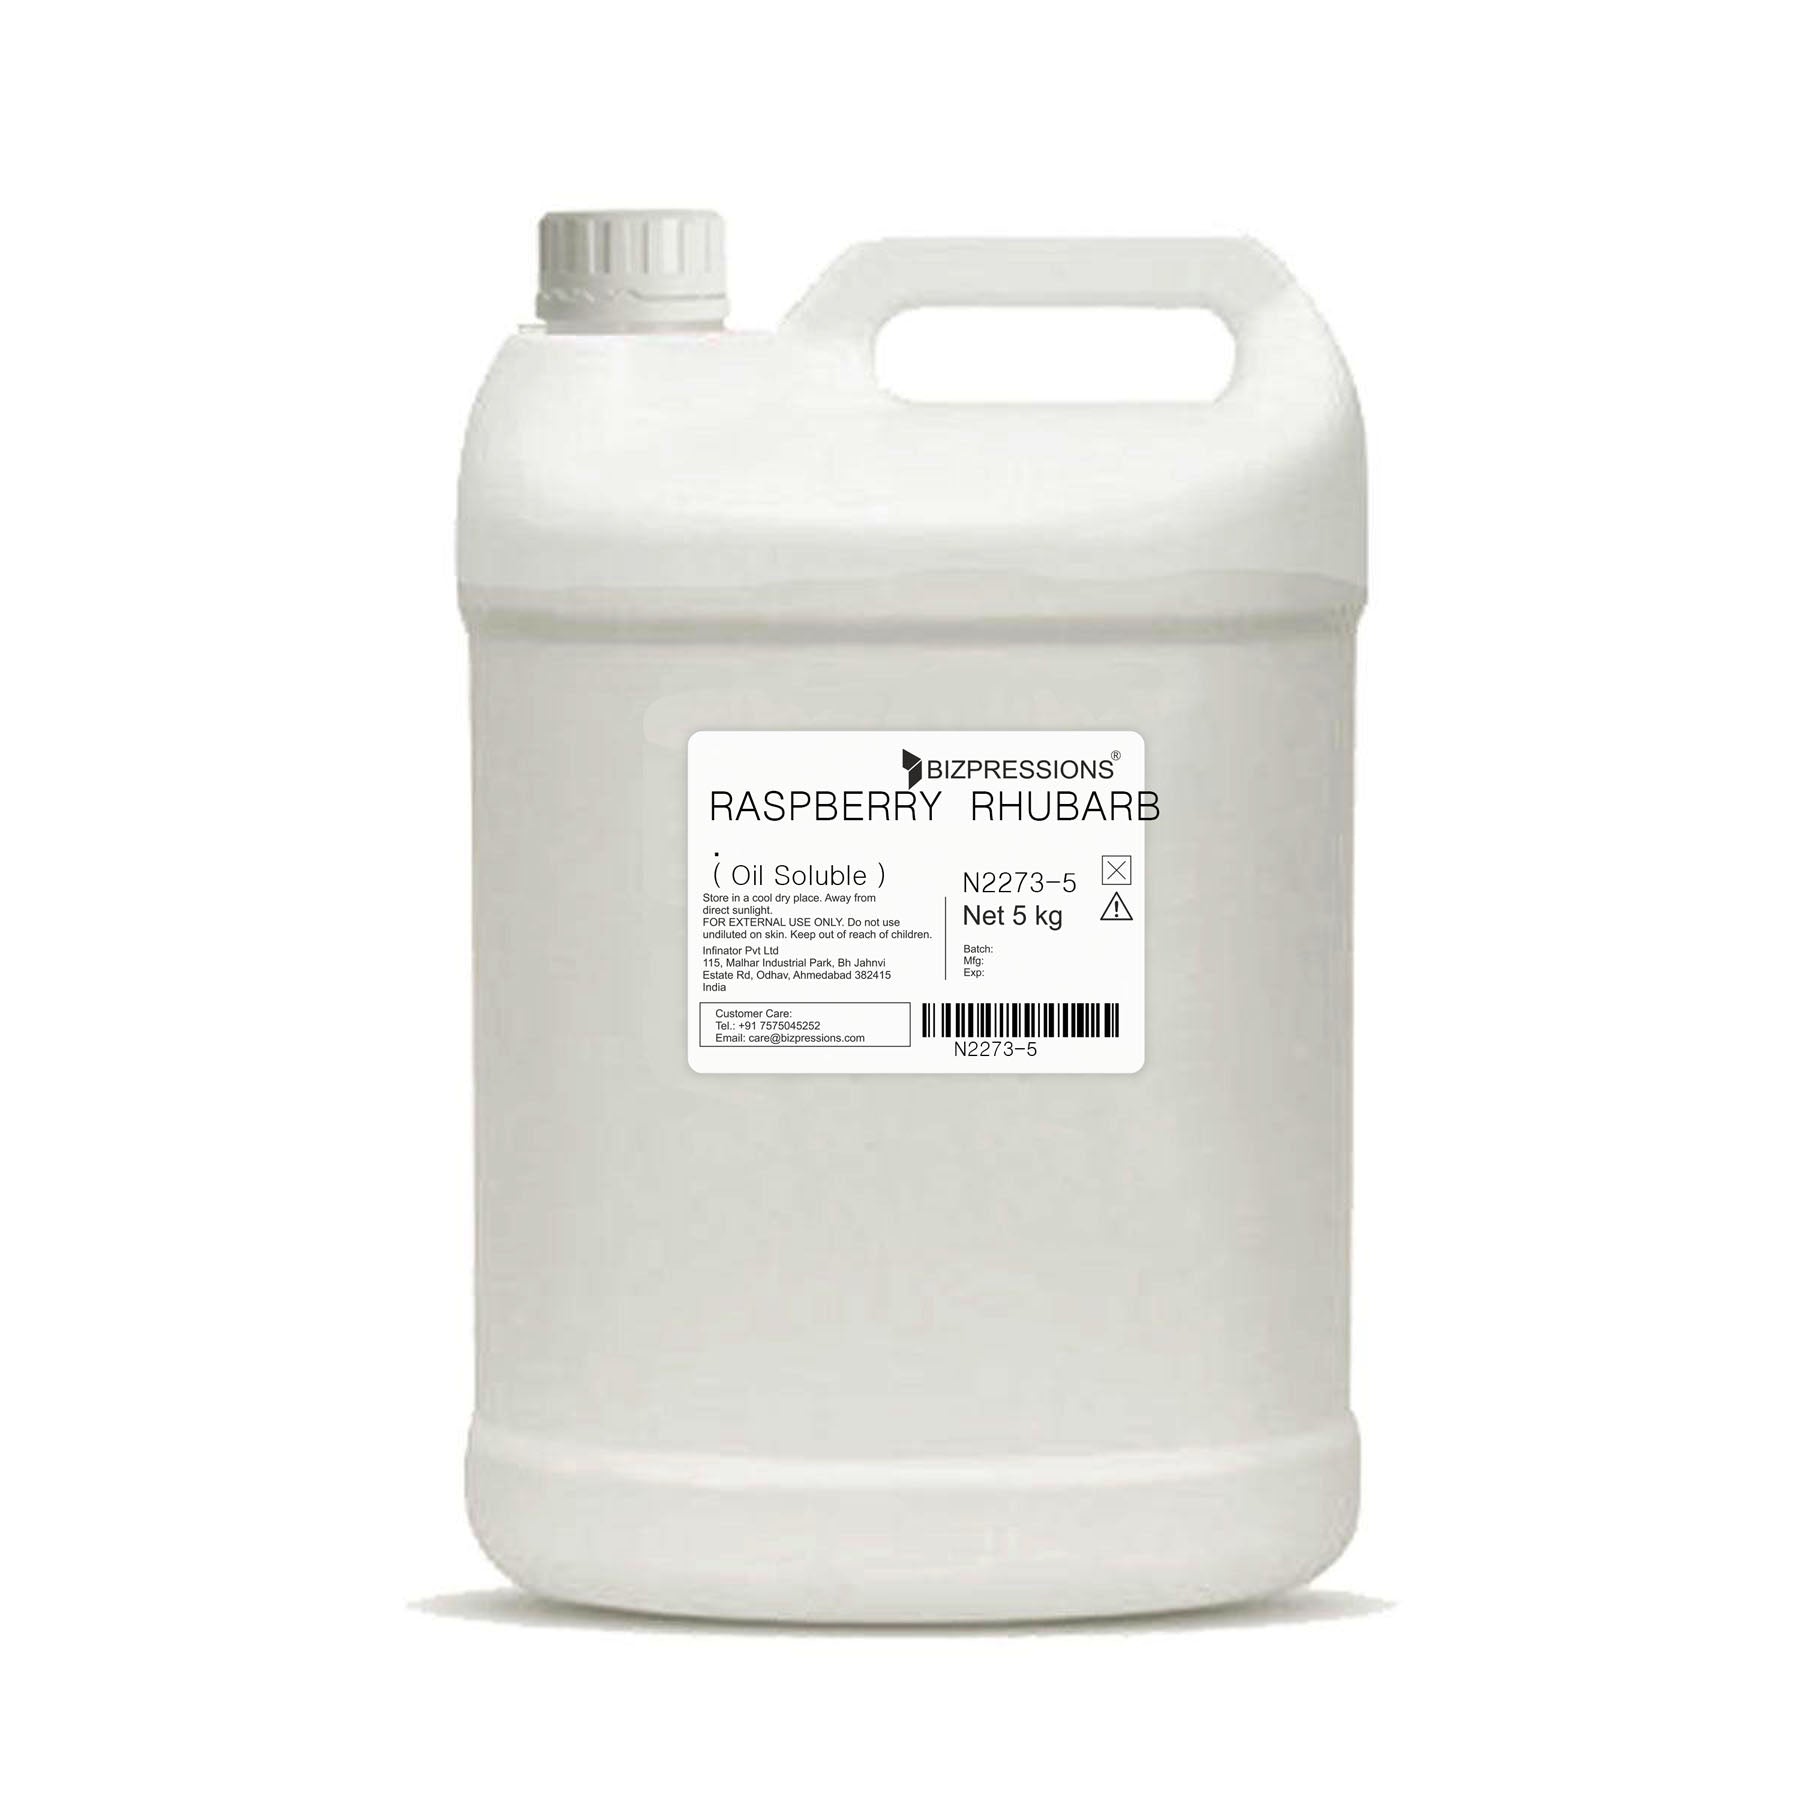 RASPBERRY RHUBARB - Fragrance ( Oil Soluble ) - 5 kg